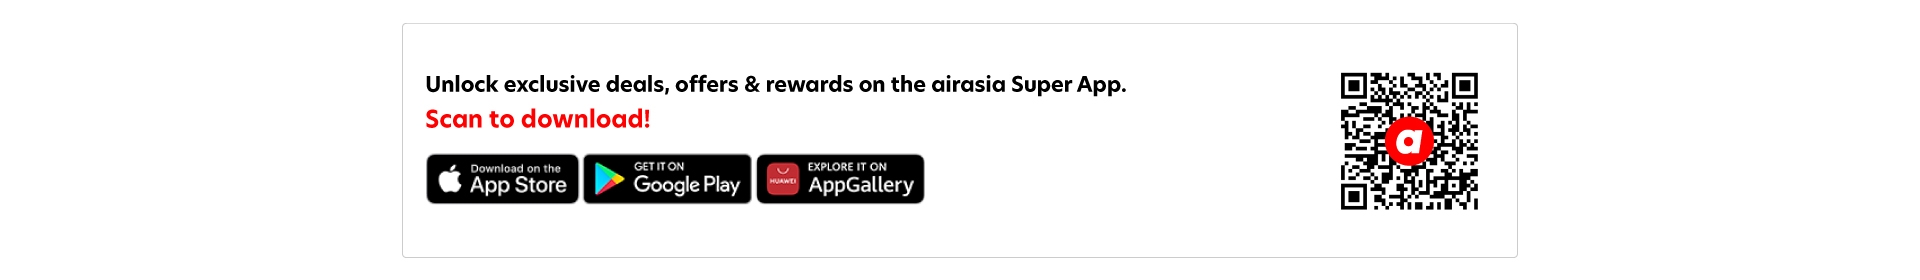 Download_airasia_Super_App